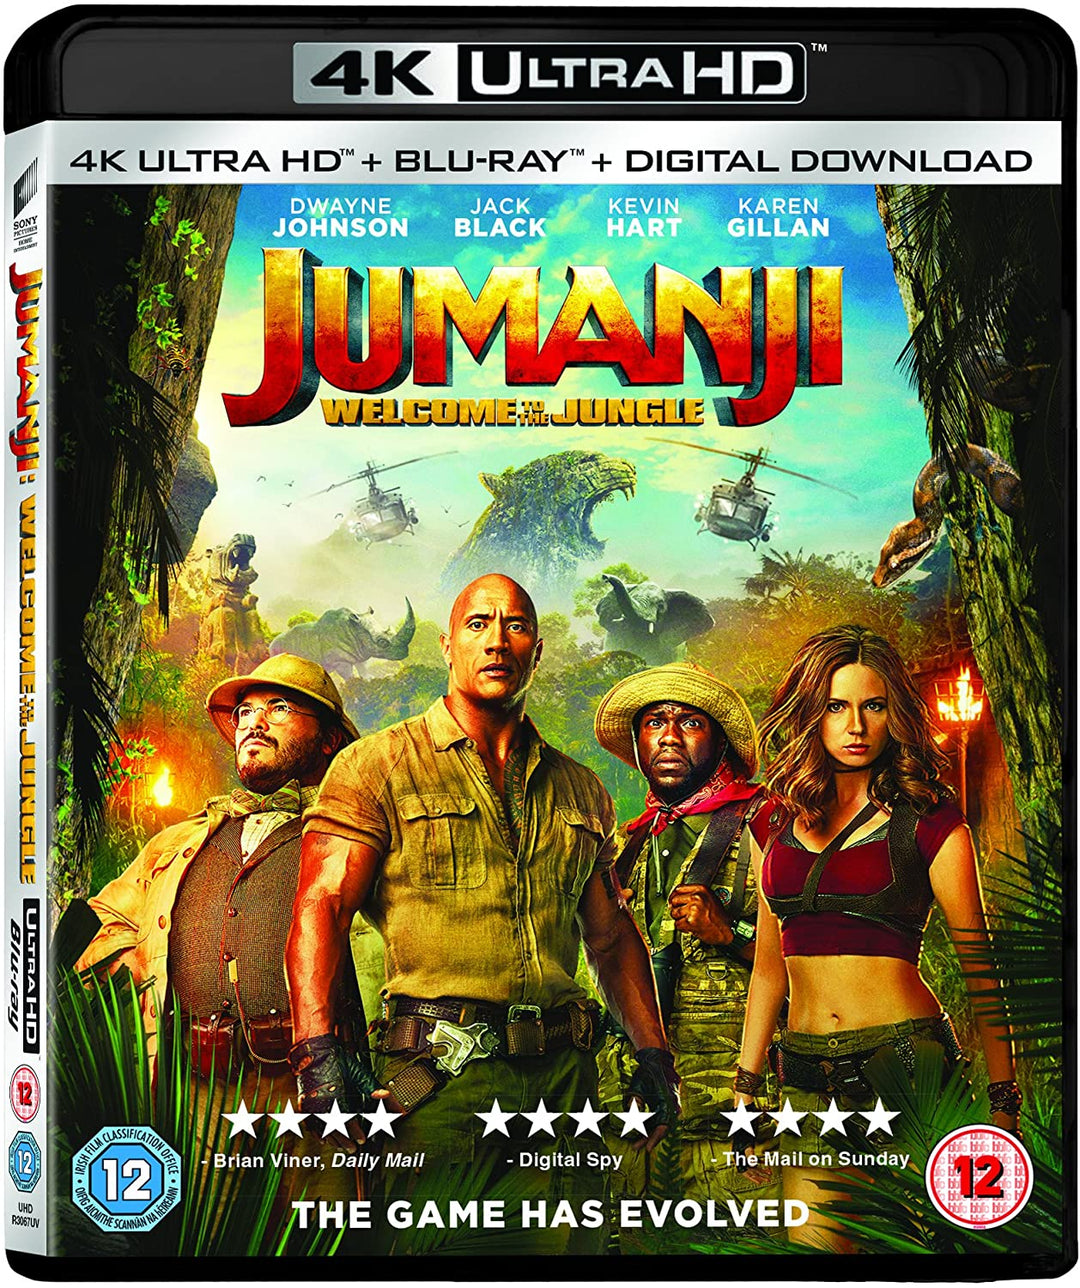 Jumanji: Welcome To The Jungle - Family/Fantasy [Blu-ray]